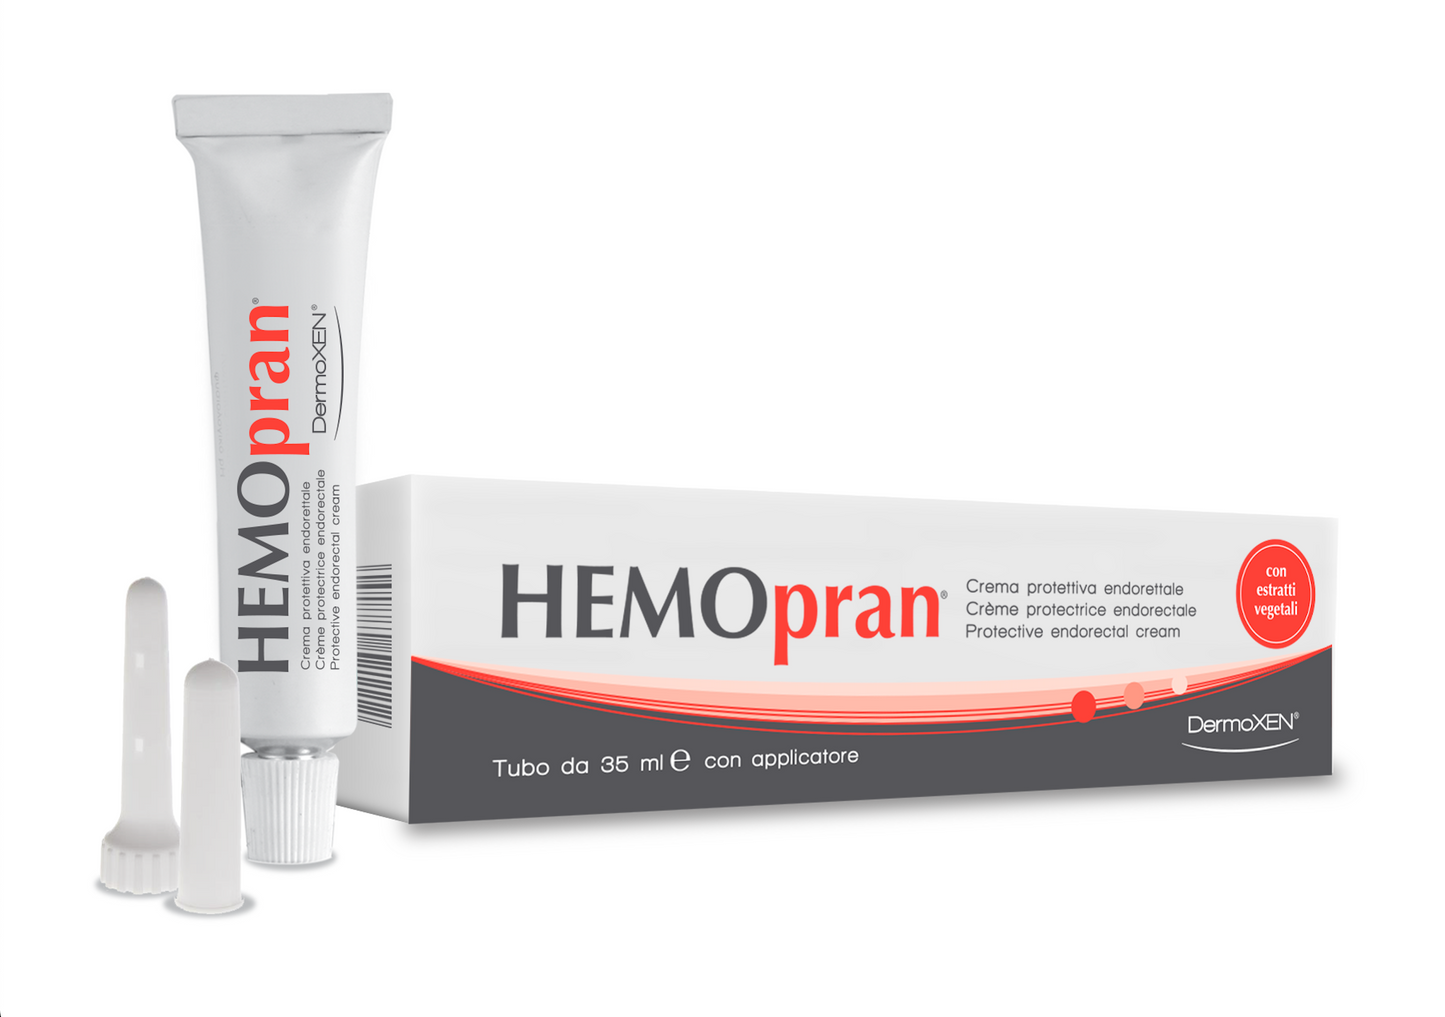 HEMOpran Protective Endorectal Cream 35mL for Piles